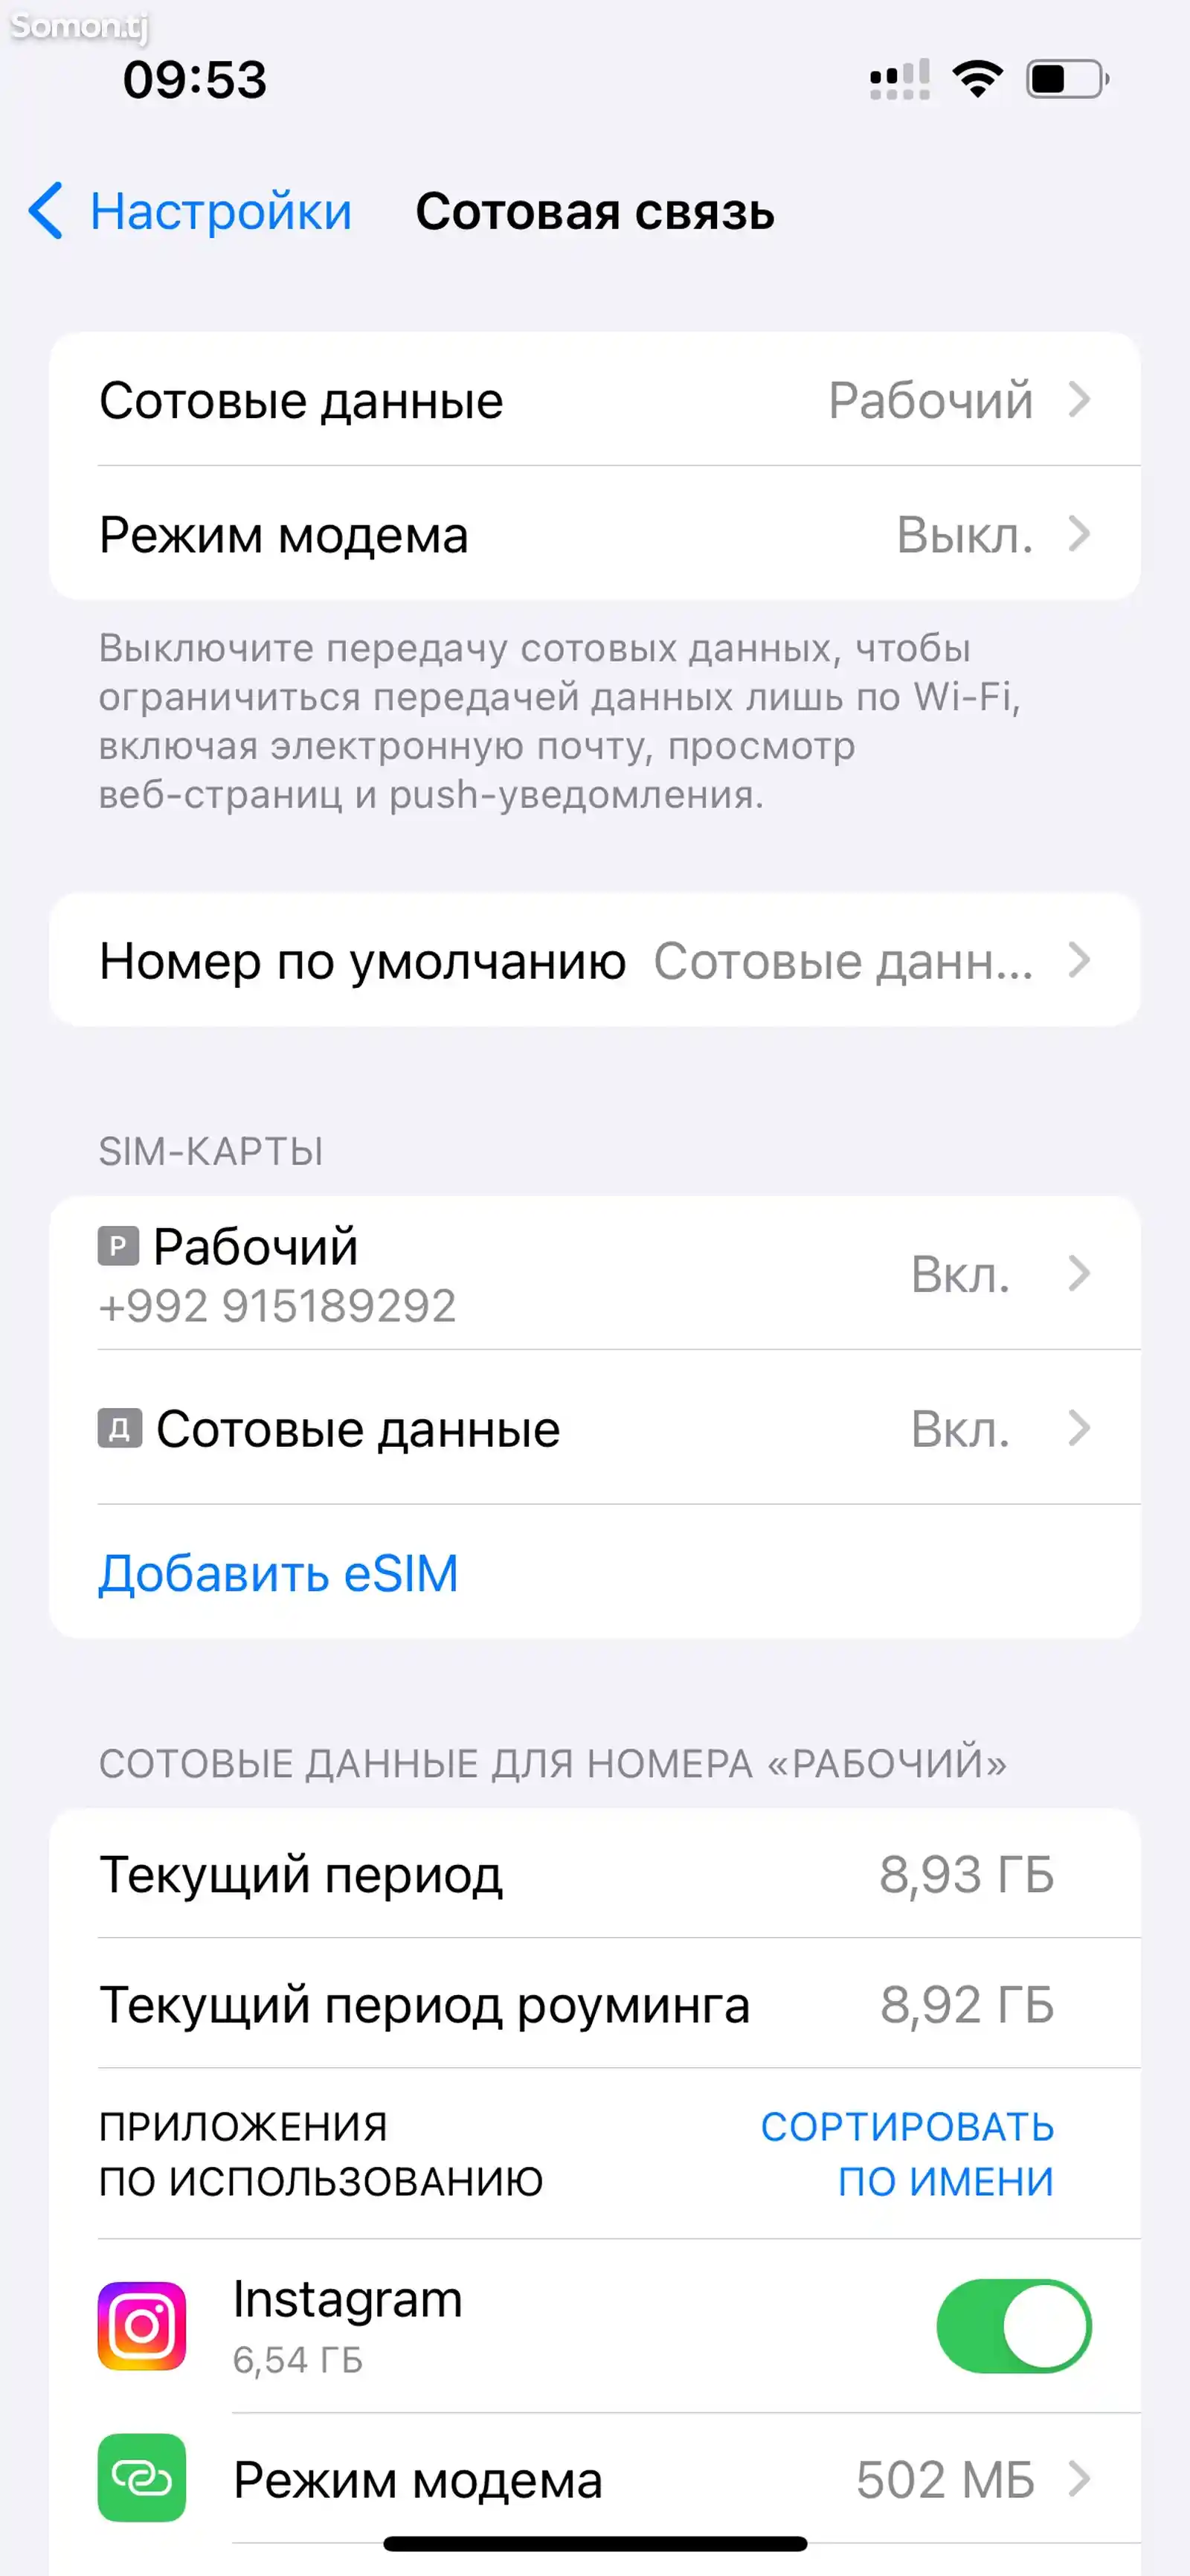 Apple iPhone 13 Pro, 128 gb, Alpine Green-3